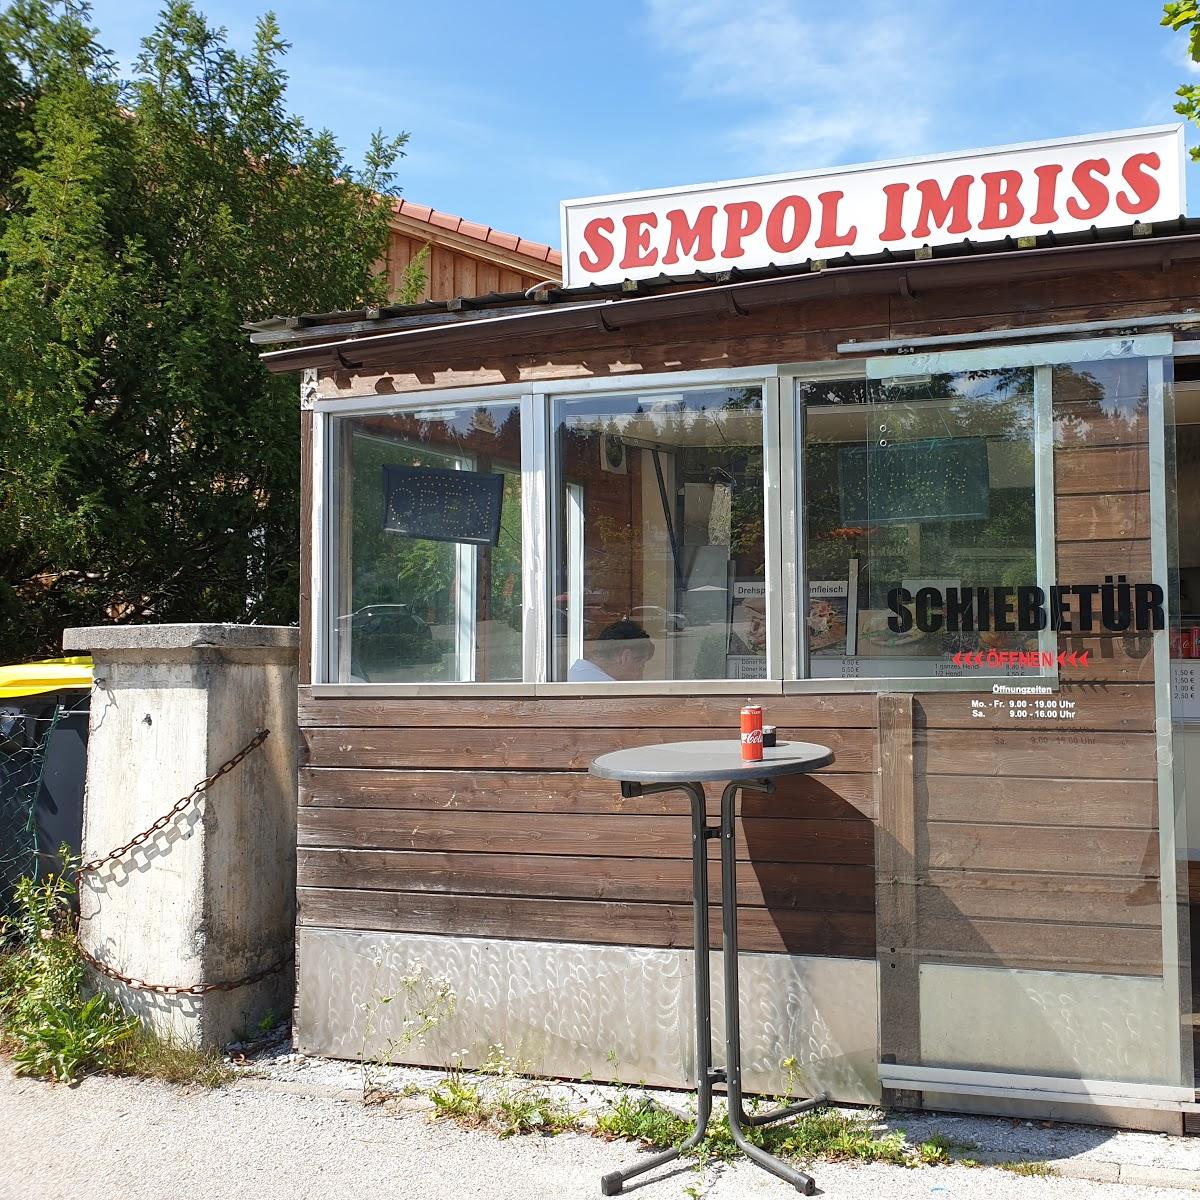 Restaurant "sempol imbiss" in  Geretsried